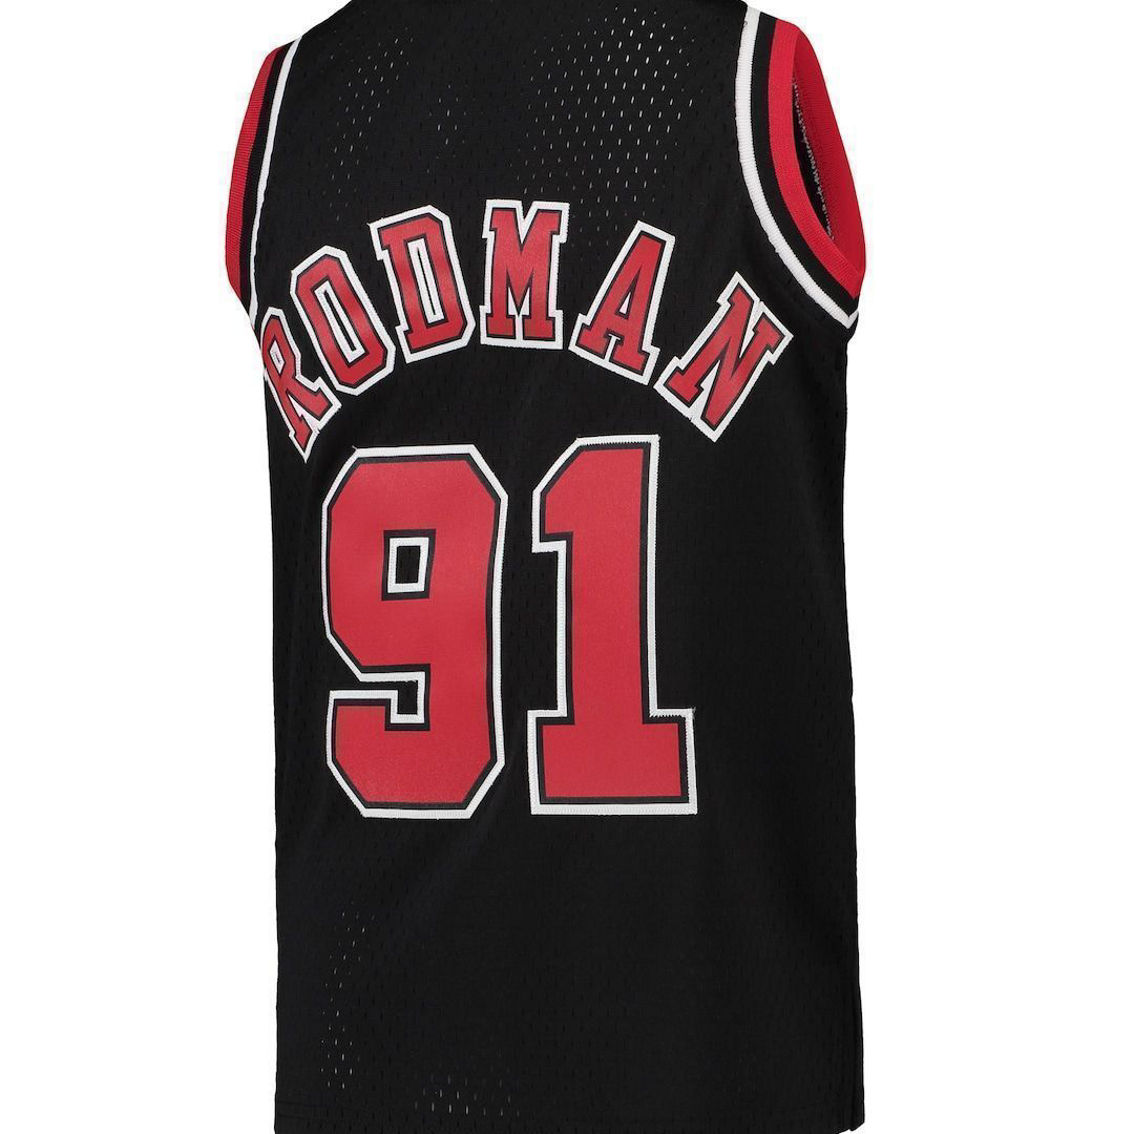  Mitchell & Ness Dennis Rodman Chicago Bulls NBA Throwback HWC  Jersey - Red : Sports & Outdoors